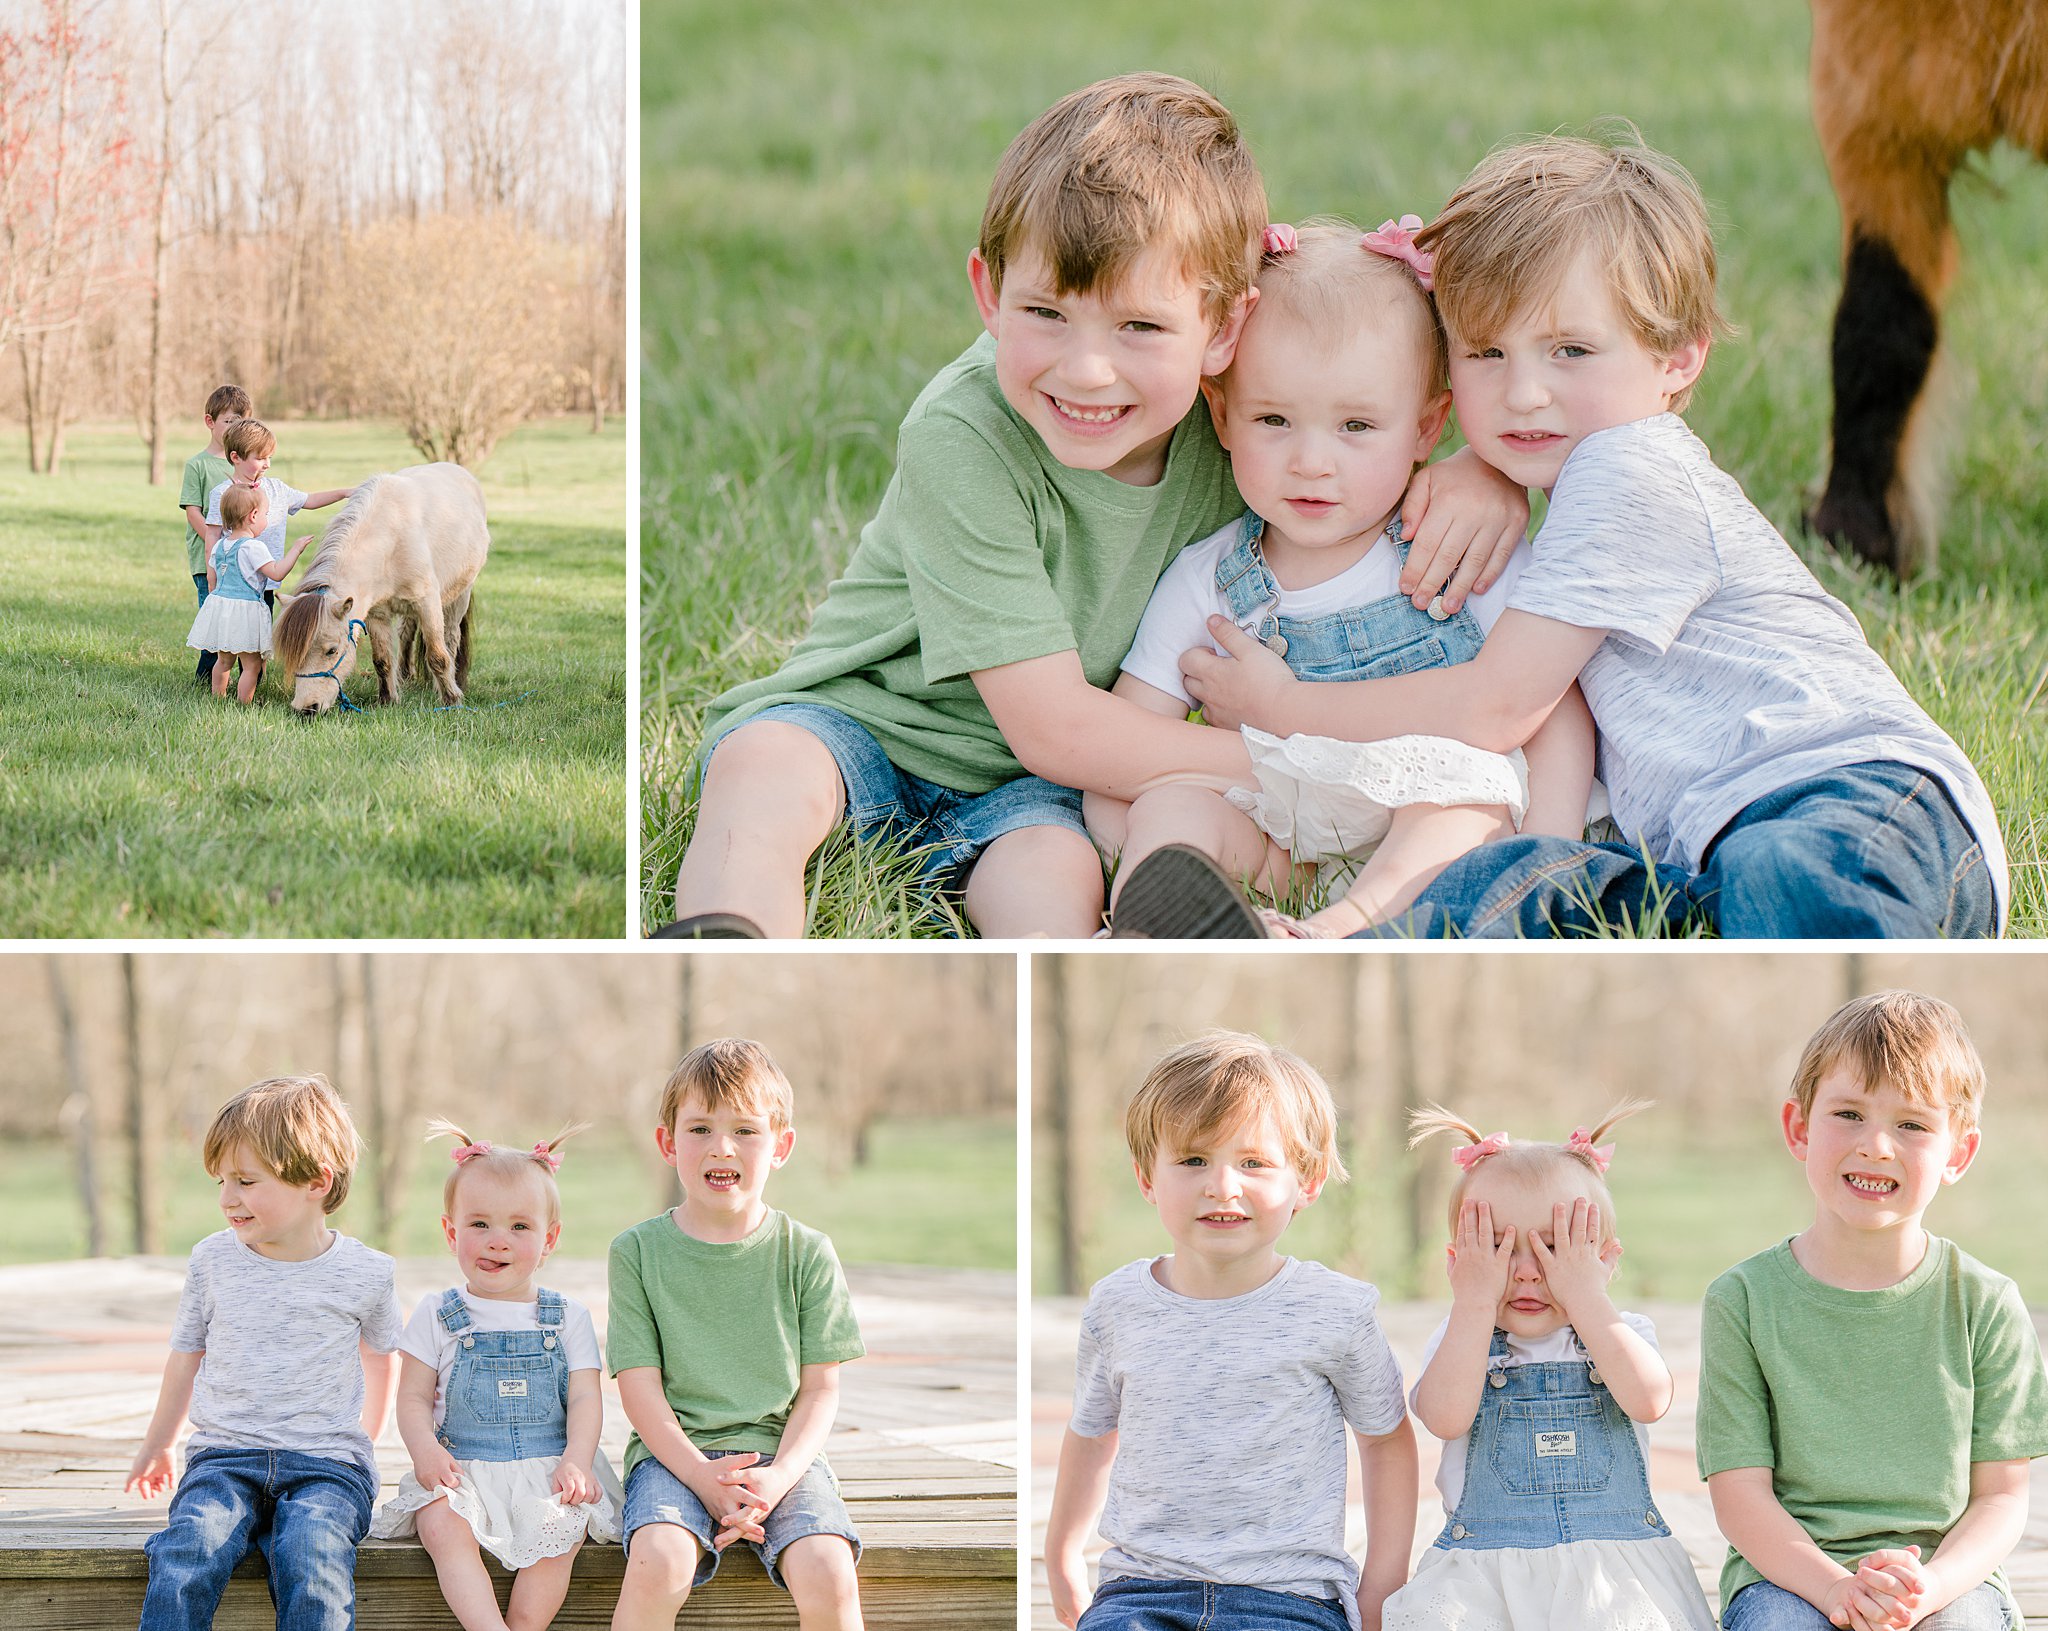 Urbana Ohio, Mechanicsburg Ohio, Family Photographer, Mini Ponies, Overalls Kids farm animals, Spring Family Photos, Ohio Family Photographer